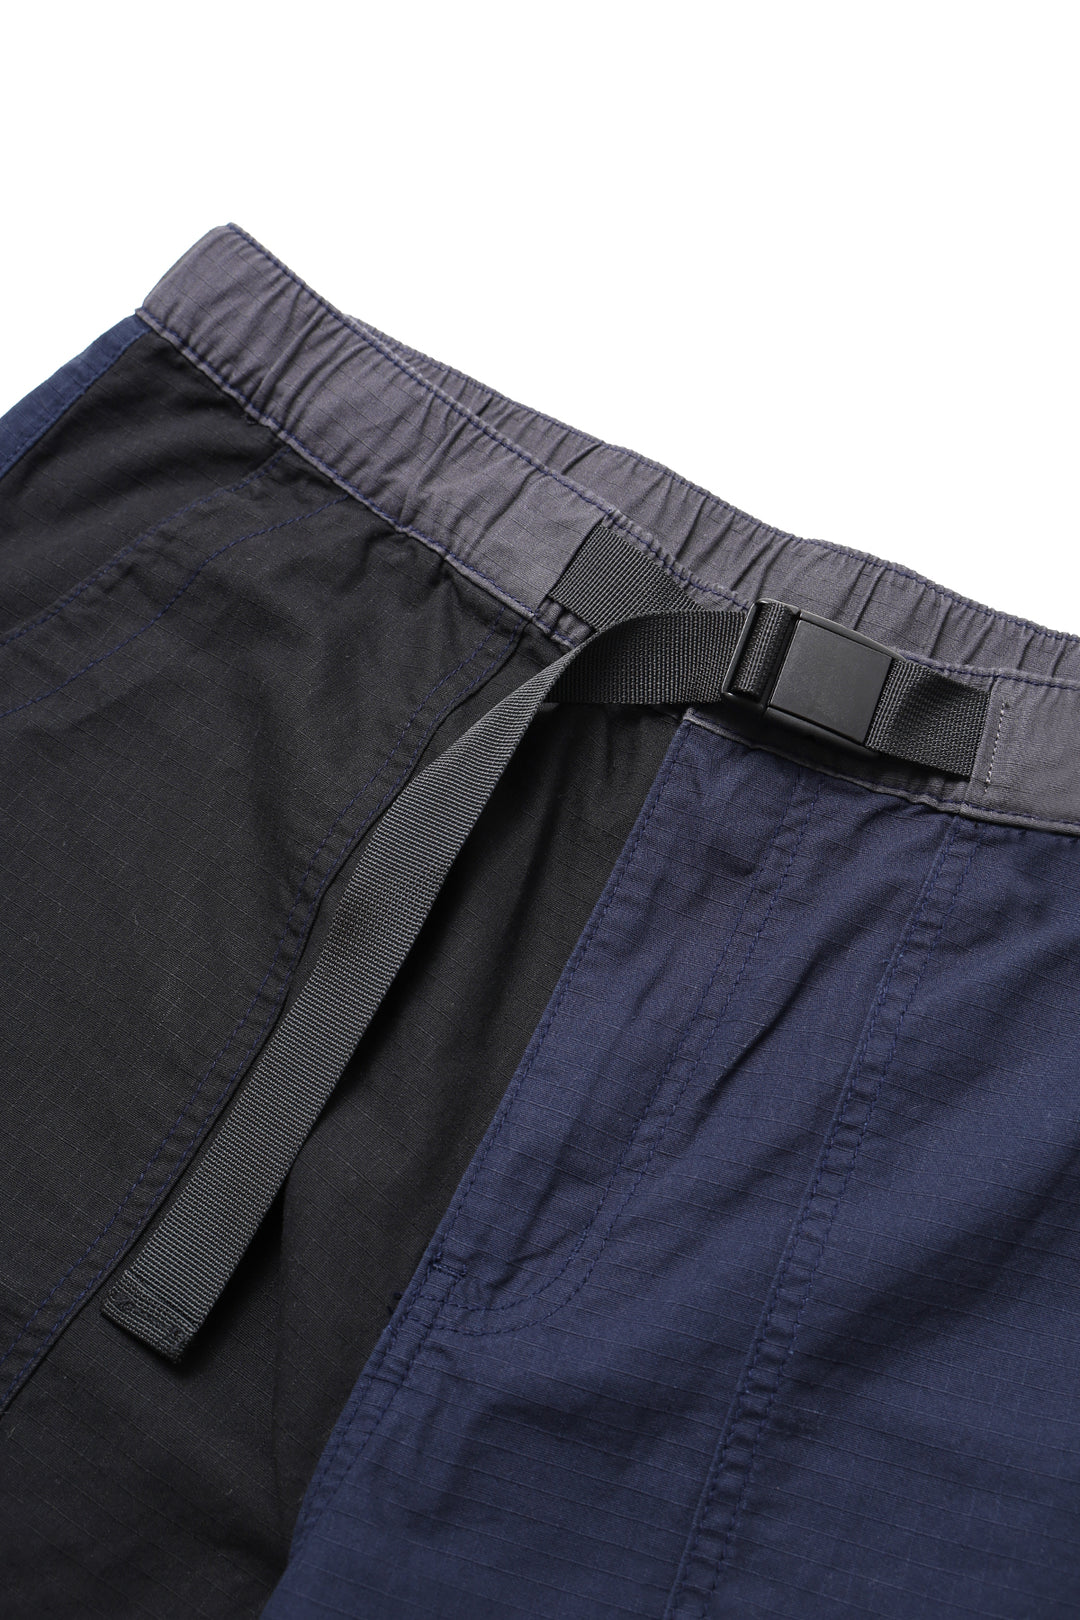 Blacksmith - Ripstop Patchwork Pants - Navy – Blacksmith Store